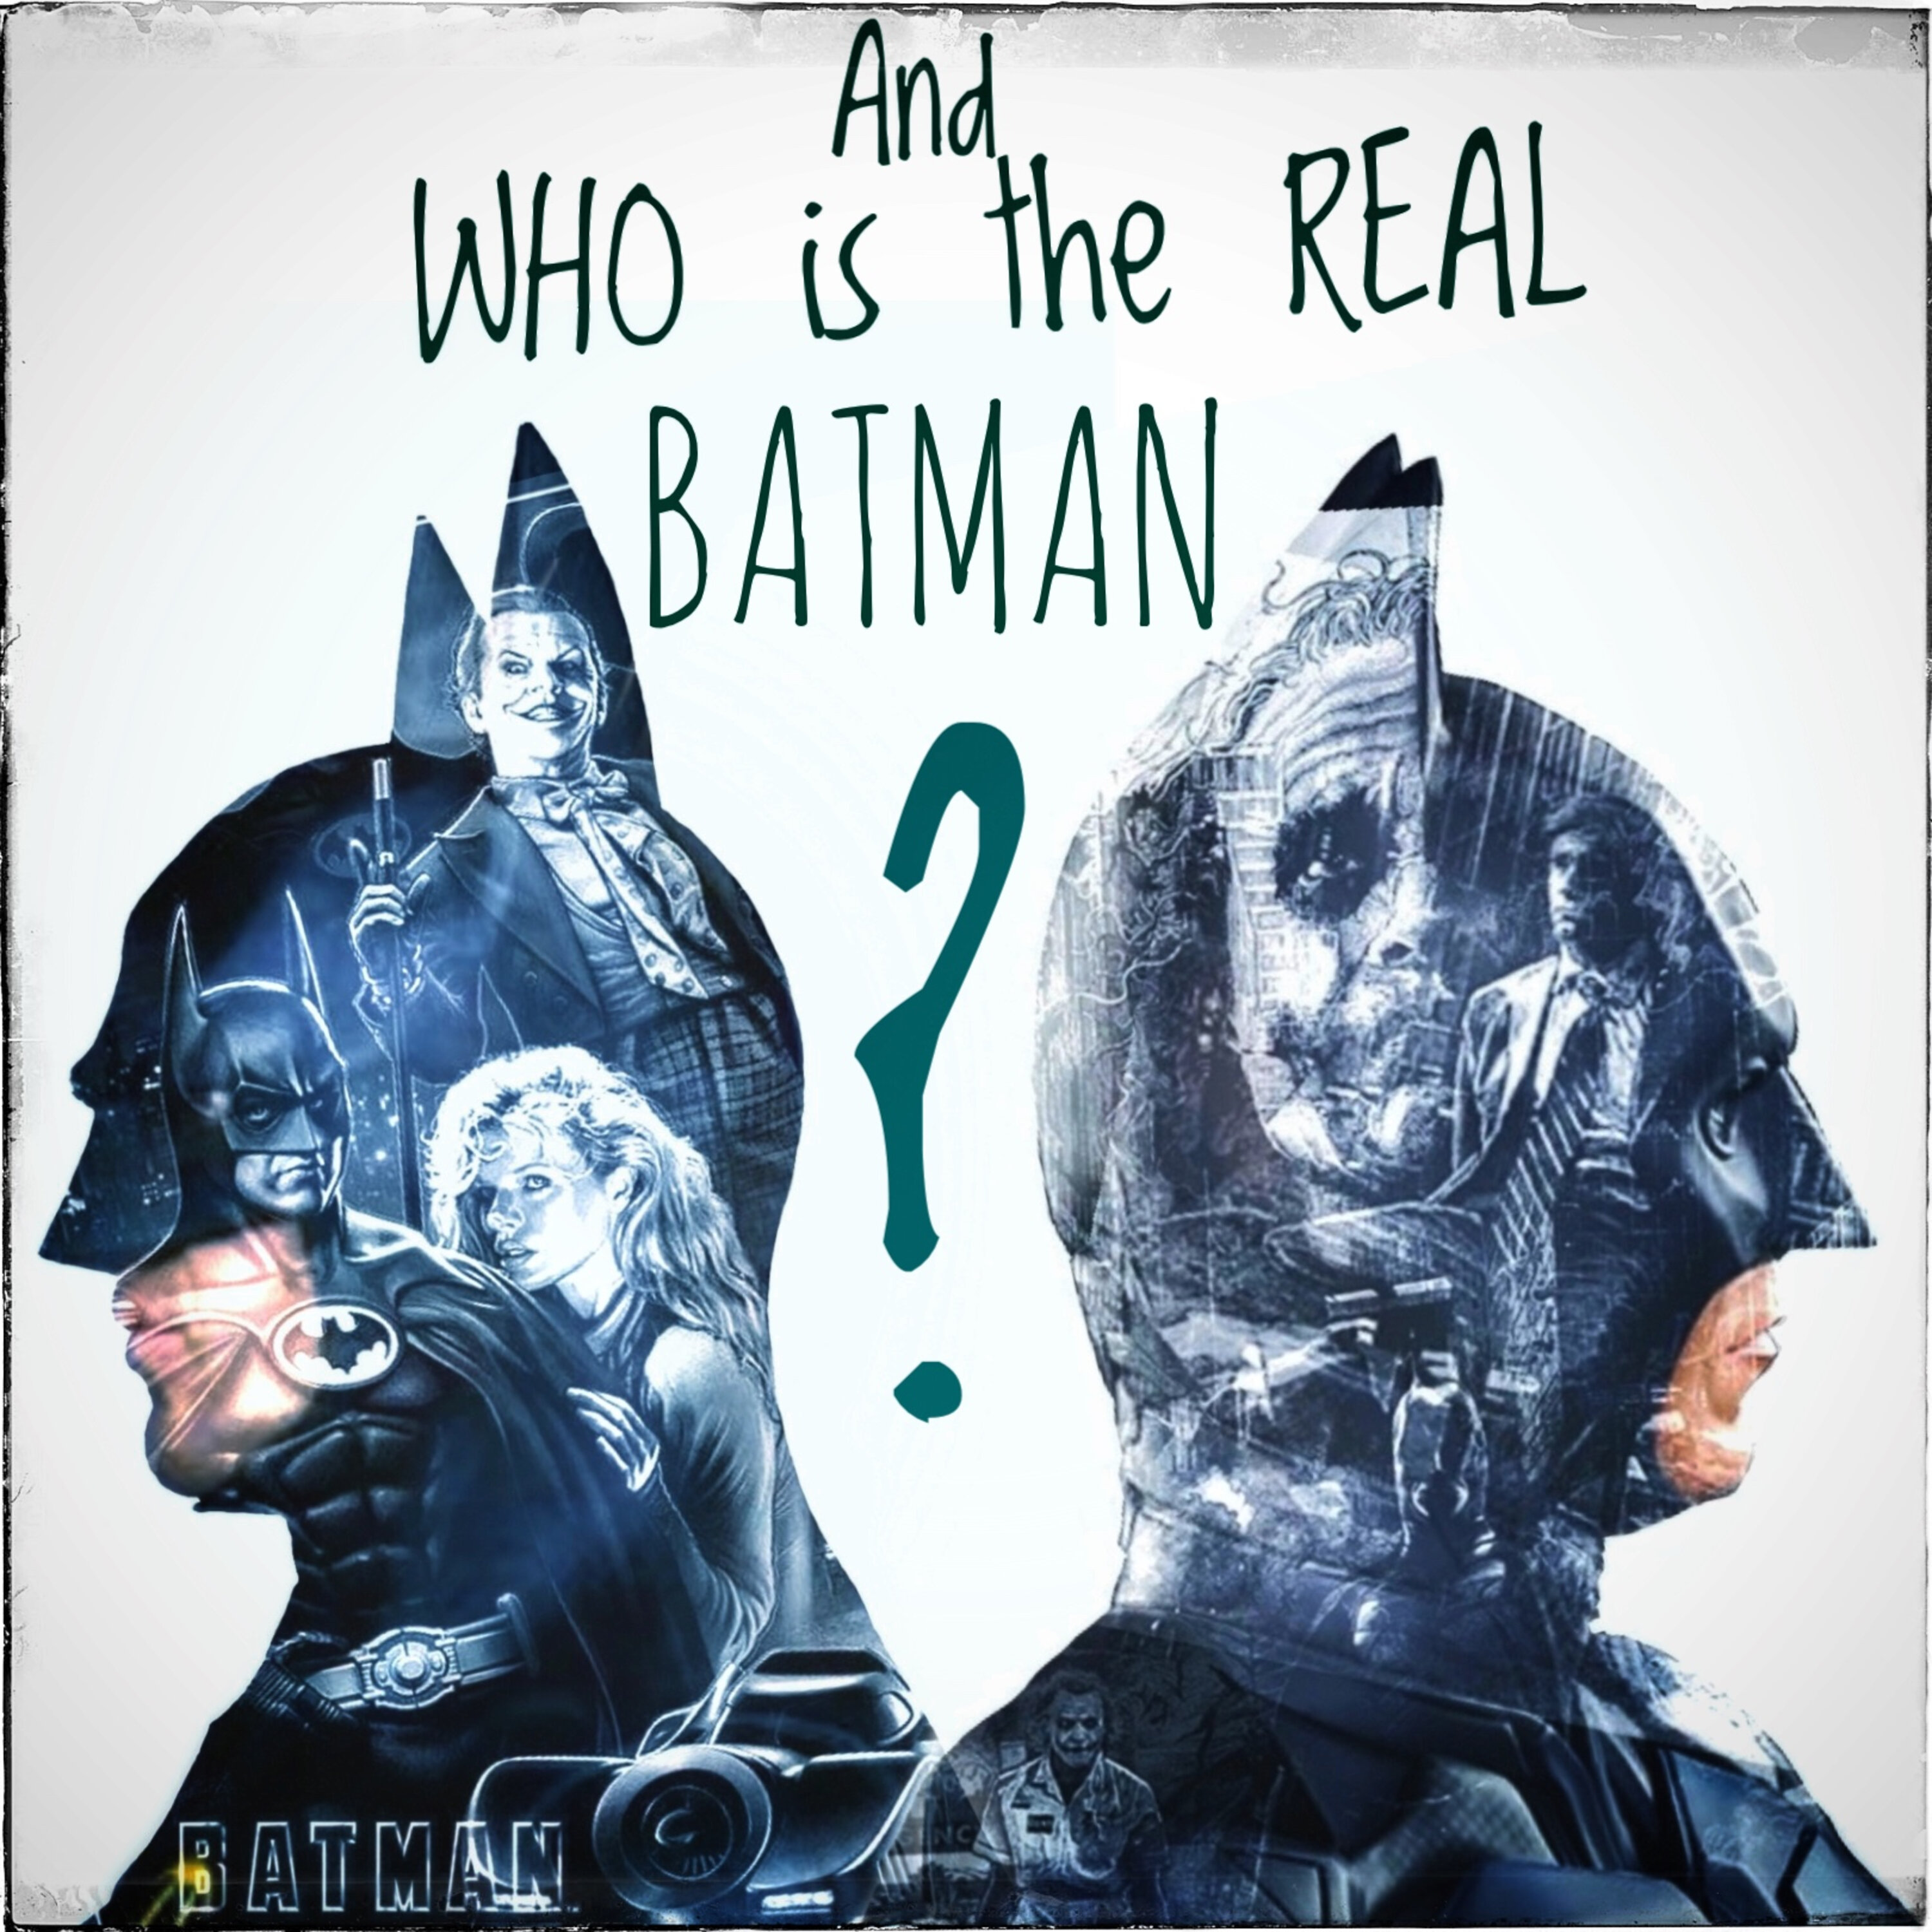 Batman (1989) vs. The Dark Knight (2008): Episode 3 Image